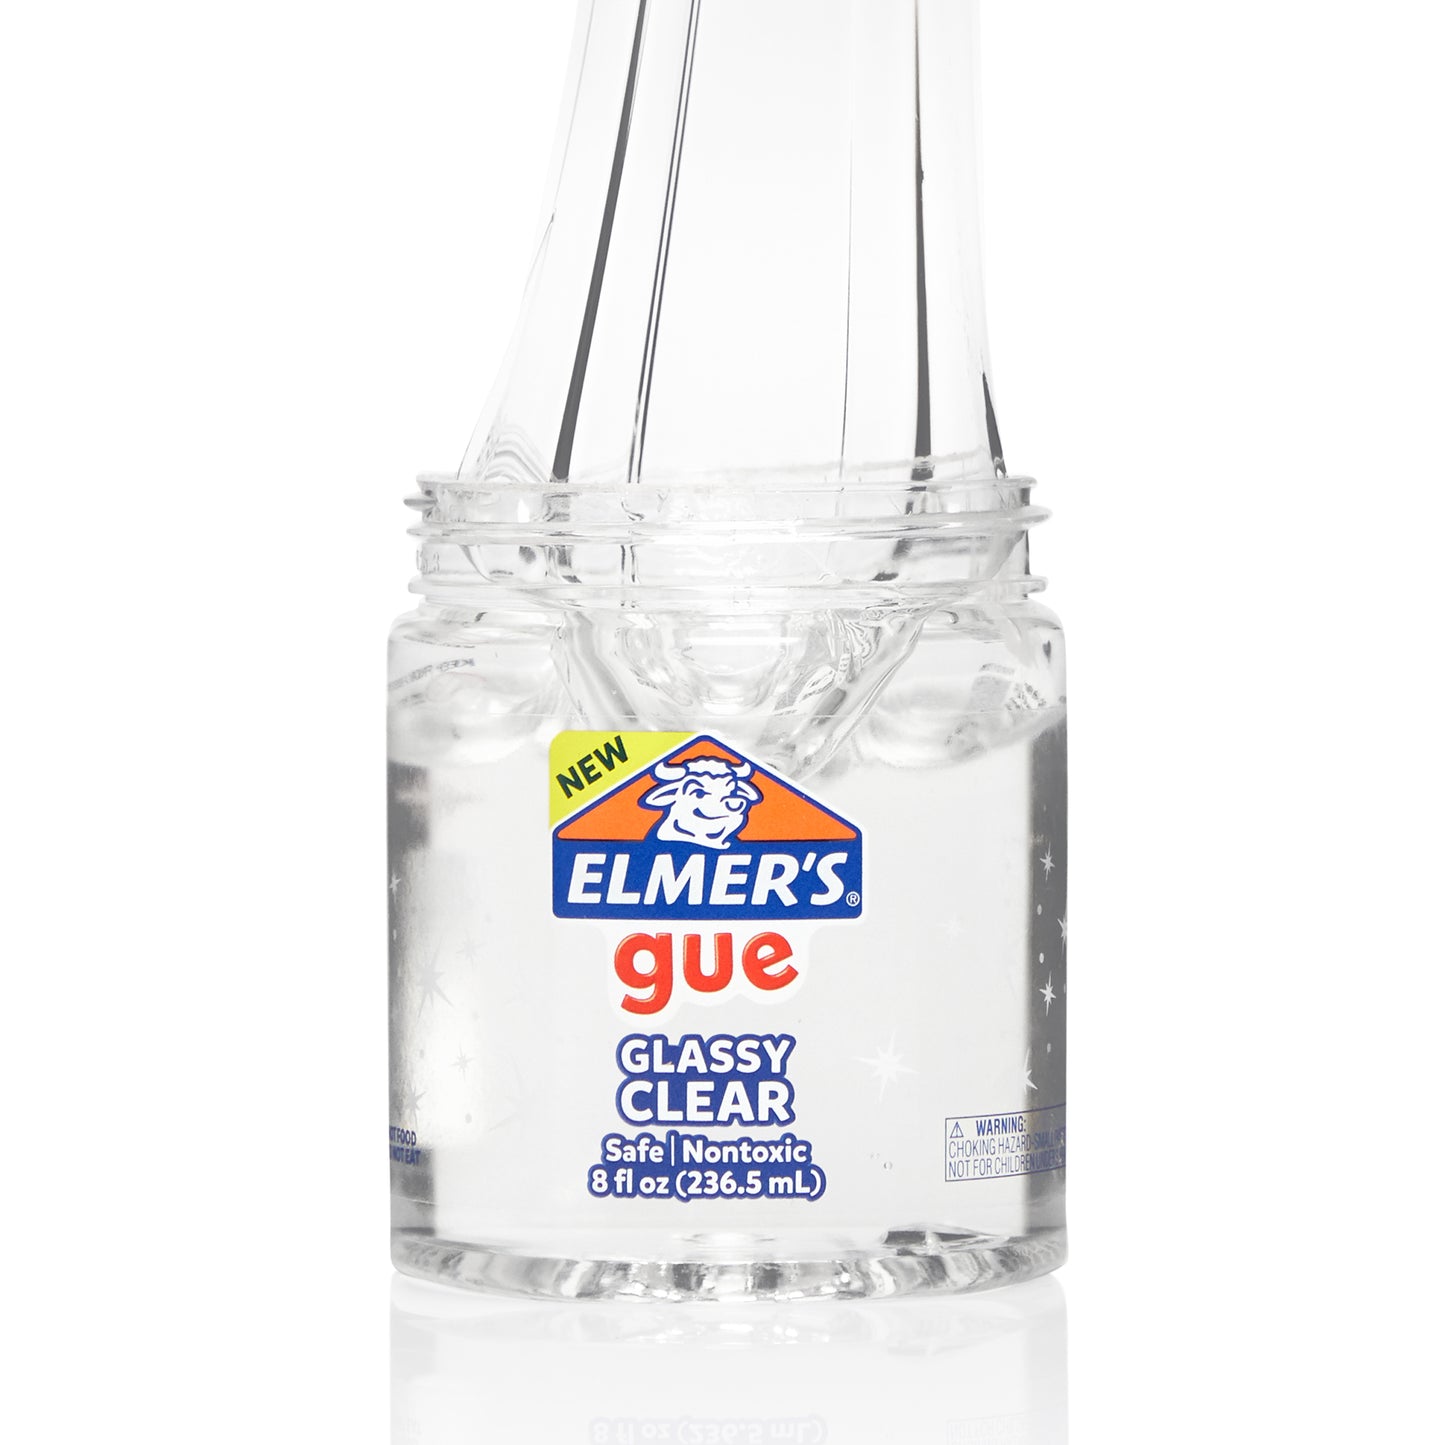 Elmer's gue slime pre-hecho kit x3 (clear. splash